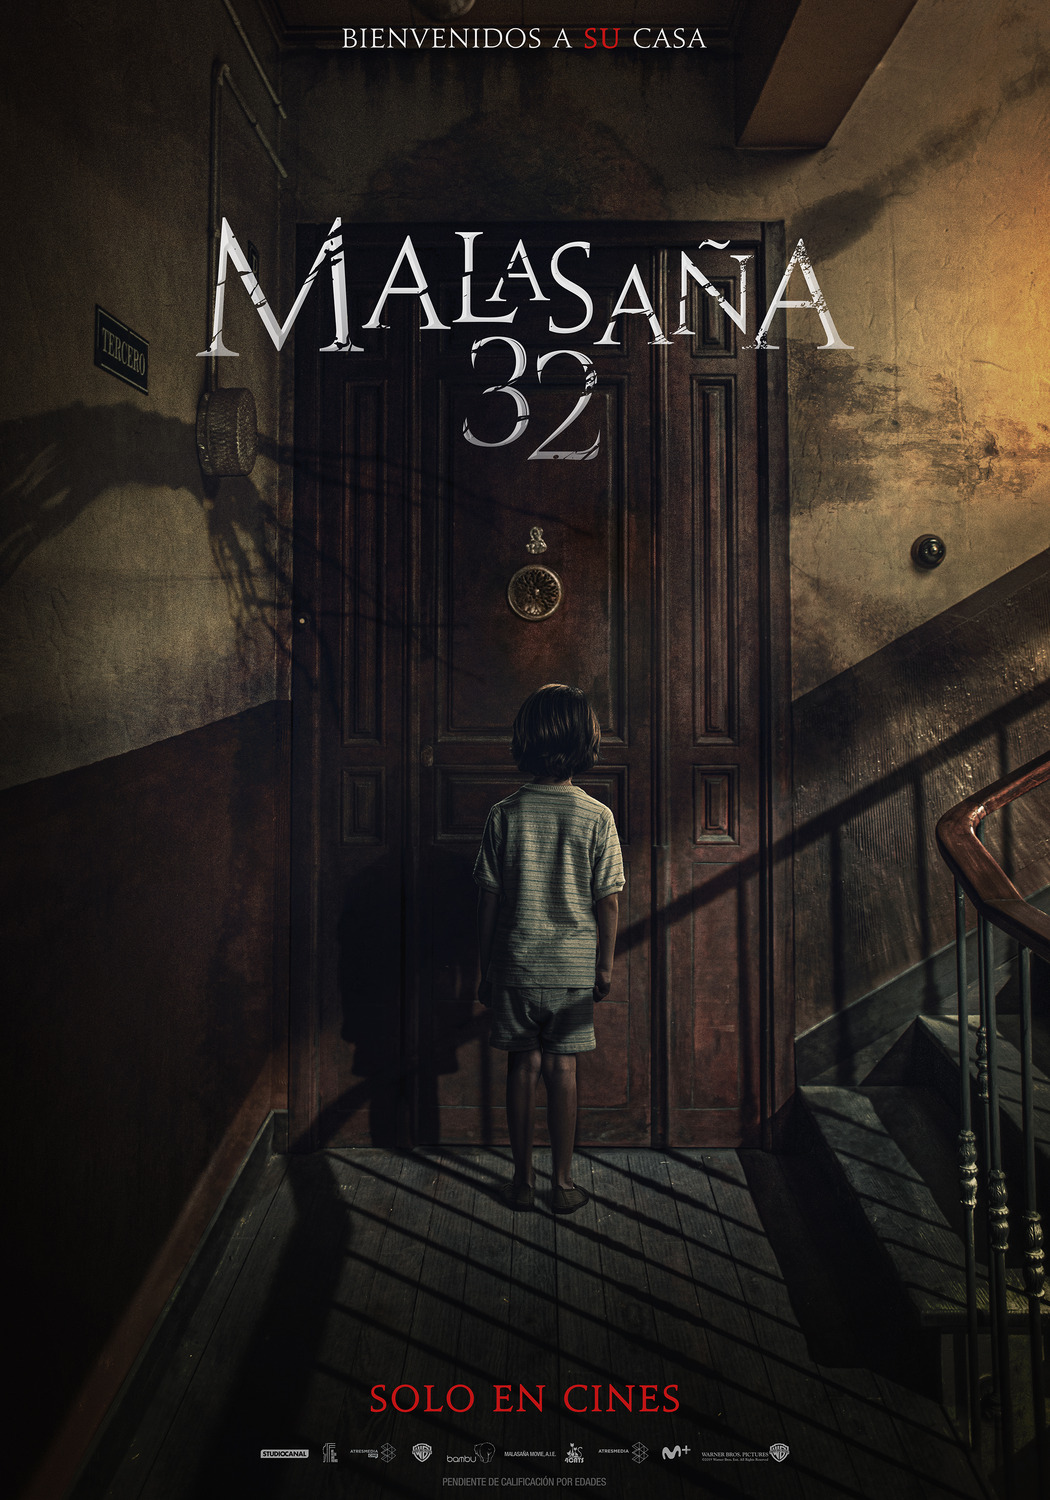 Extra Large Movie Poster Image for Malasaña 32 